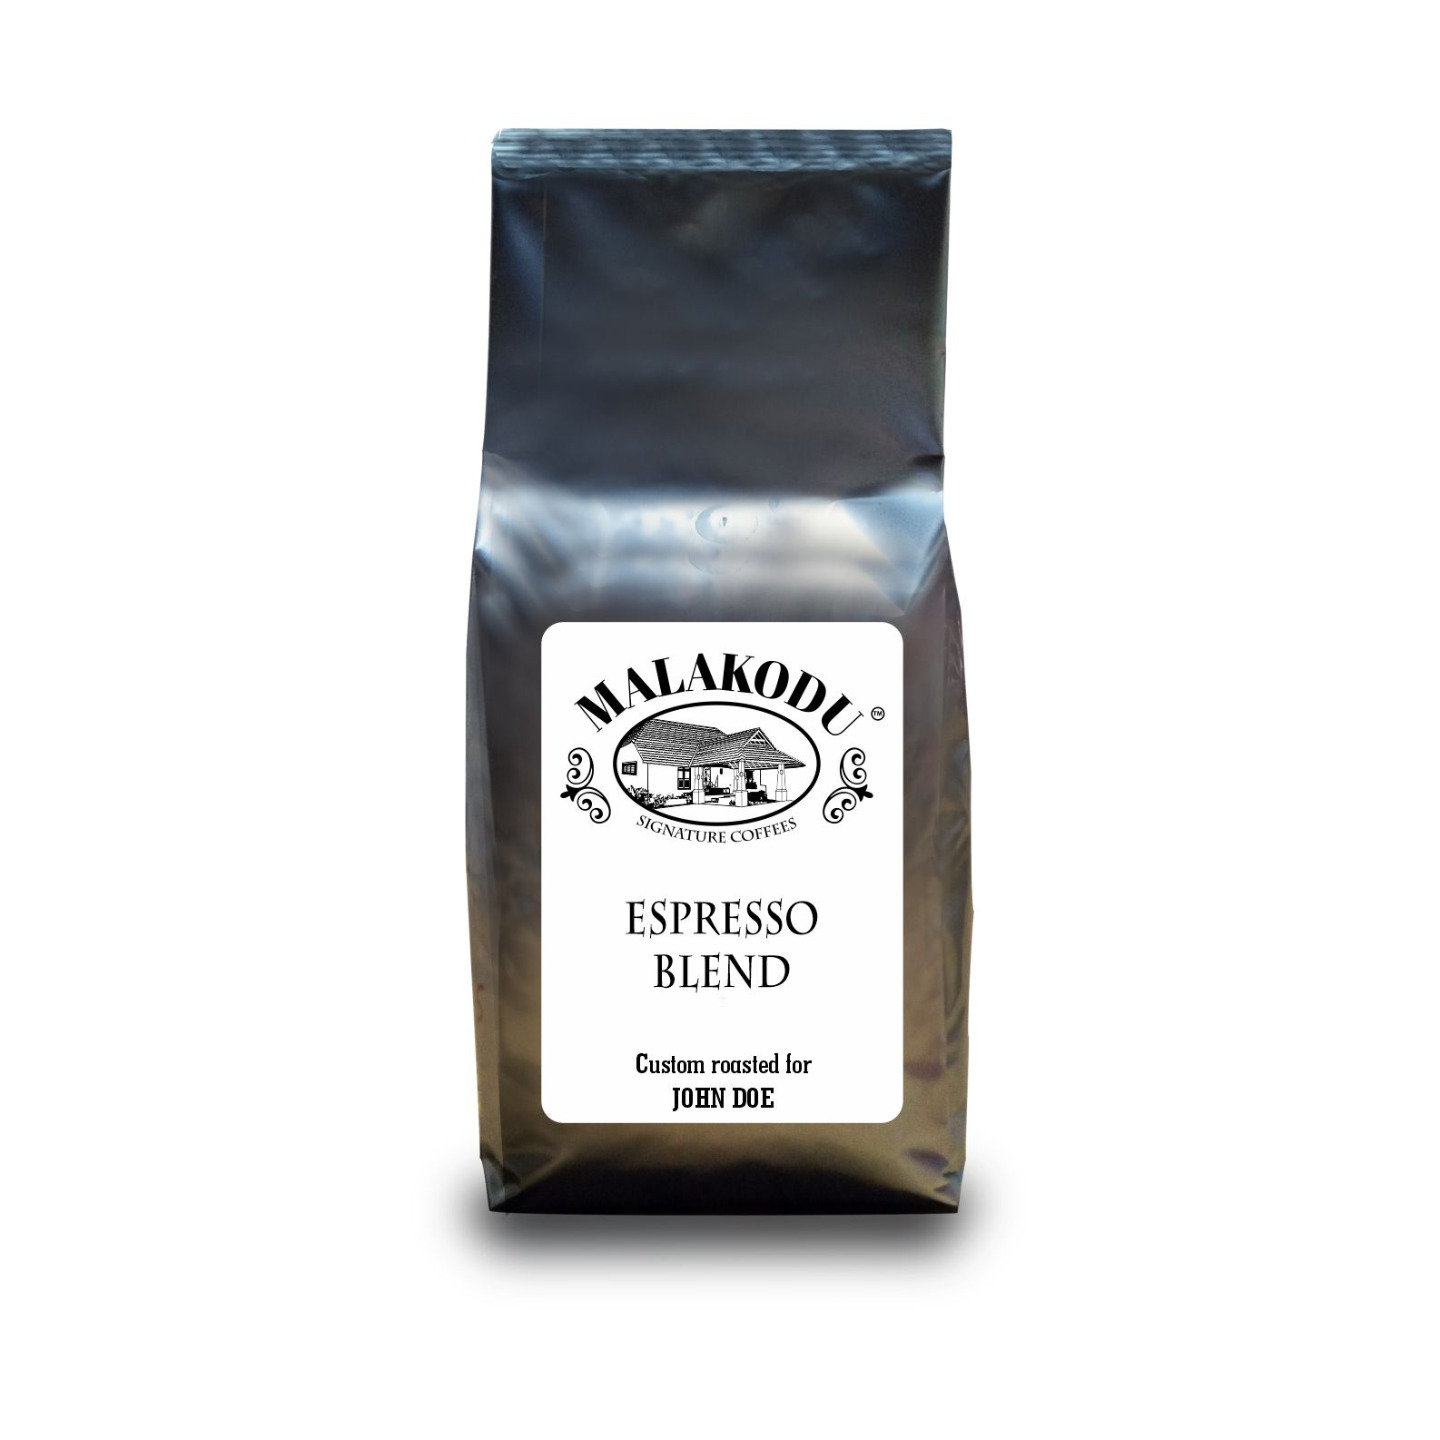 MALAKODU - Classic Espresso Blend - Roasted Beans 450950 grams